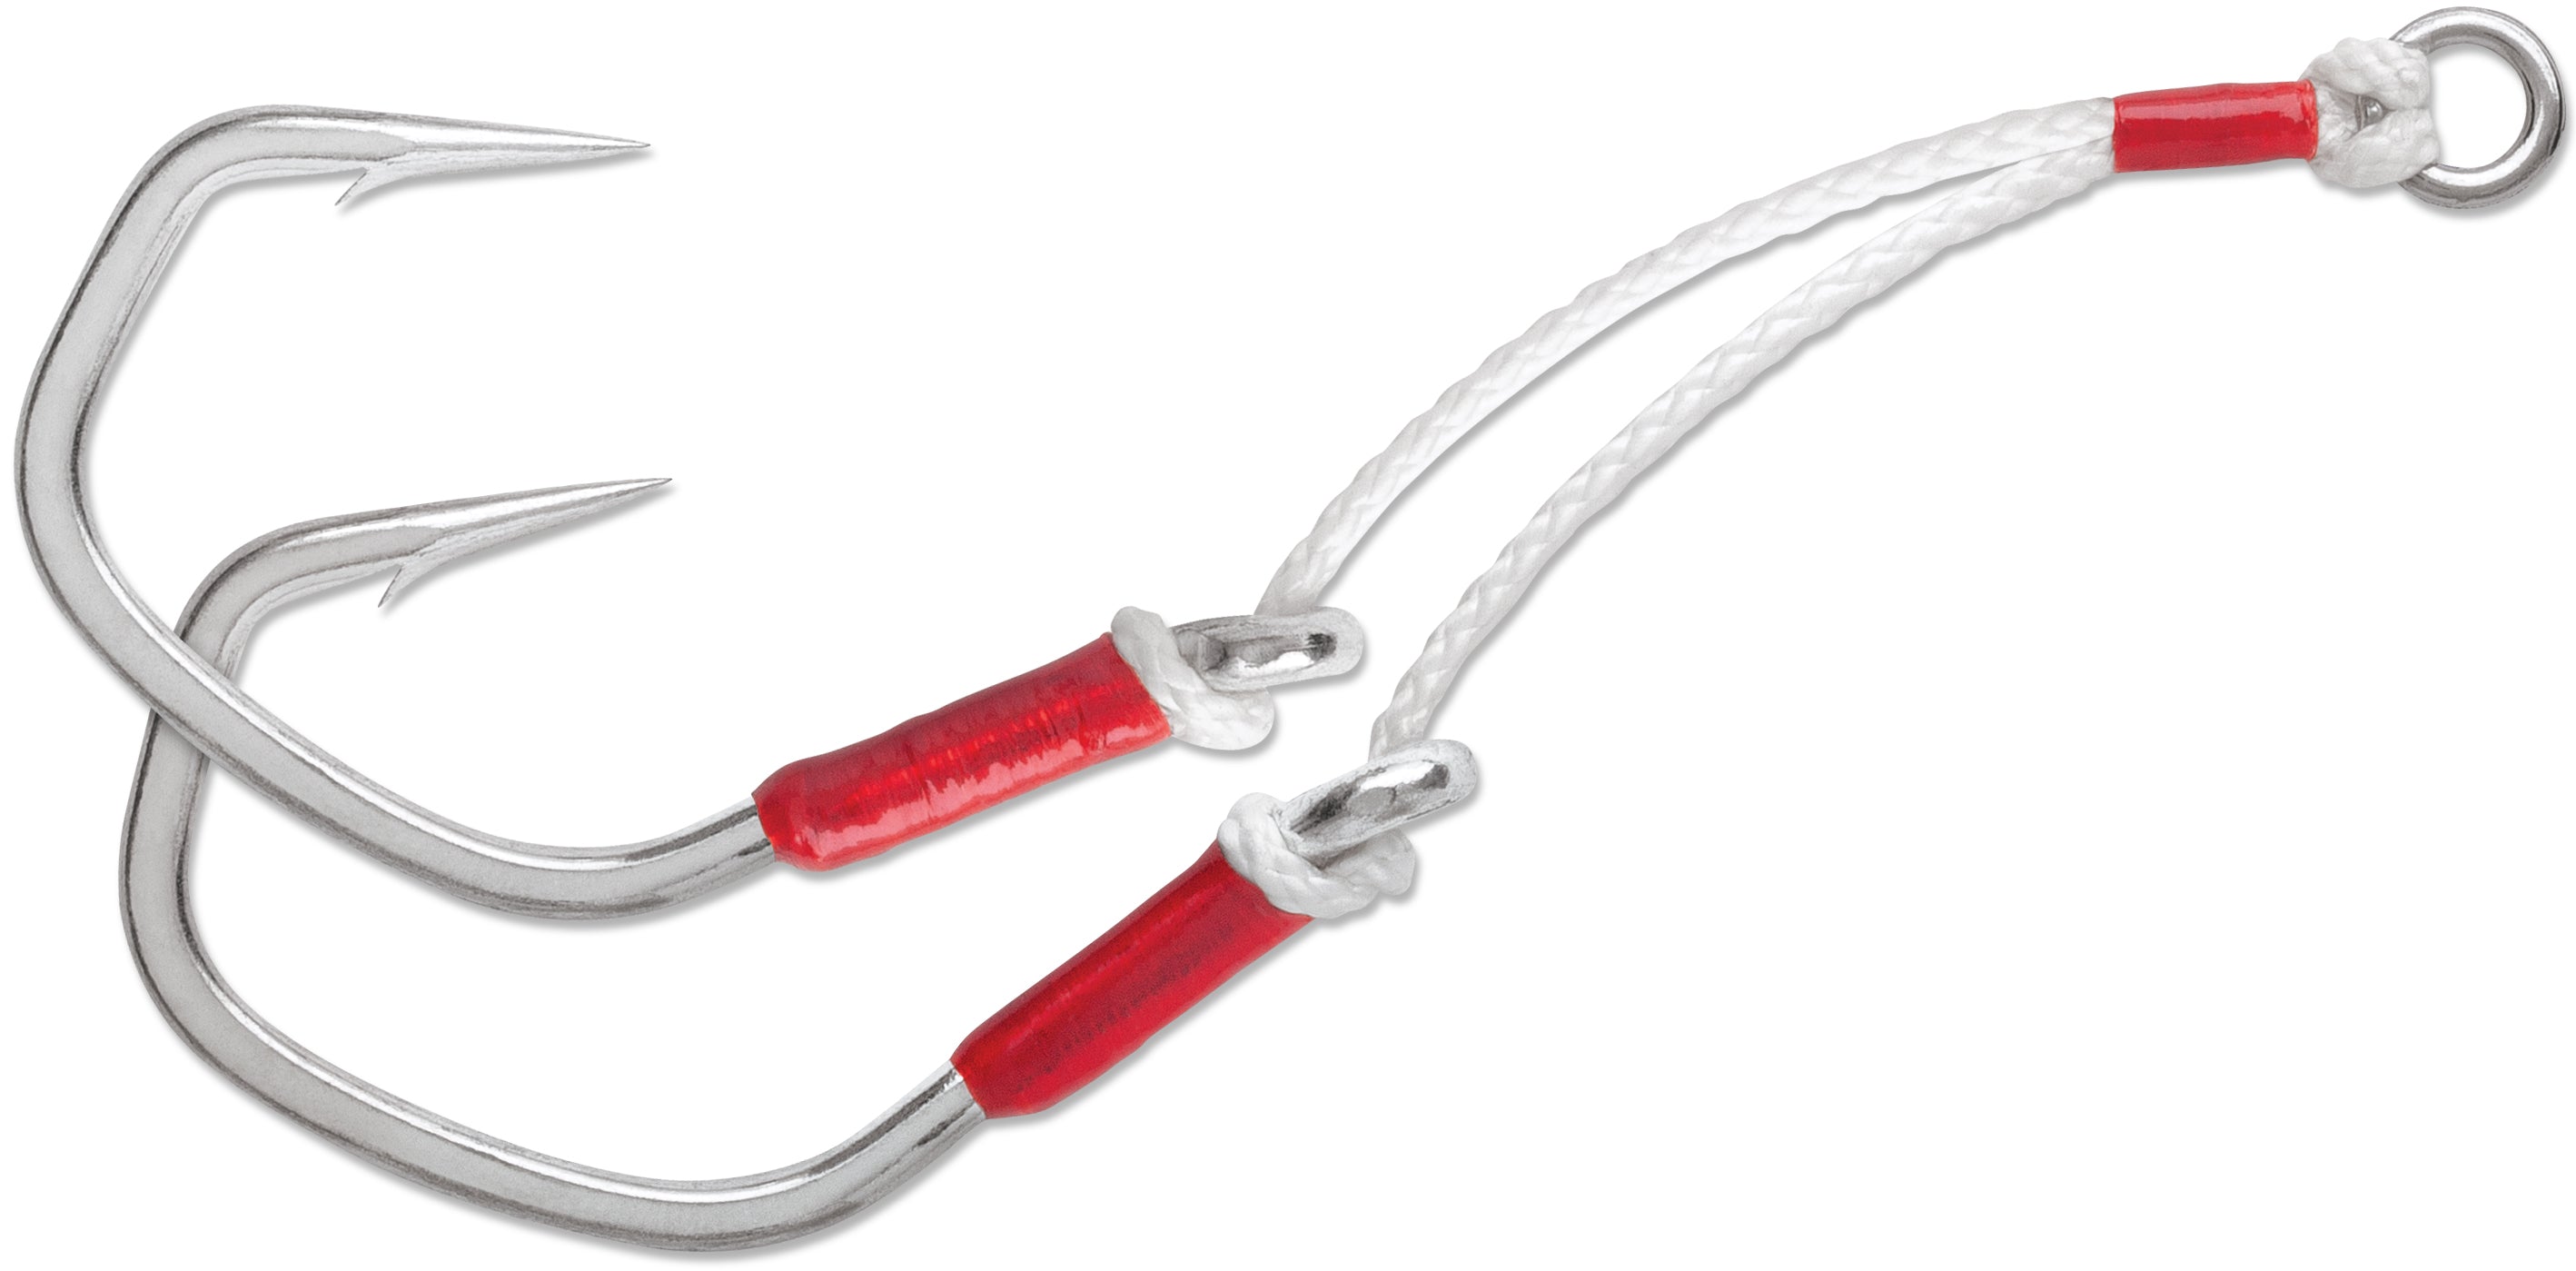 Carbon Steel Assist Hook Kit, Assist Hook Jigging